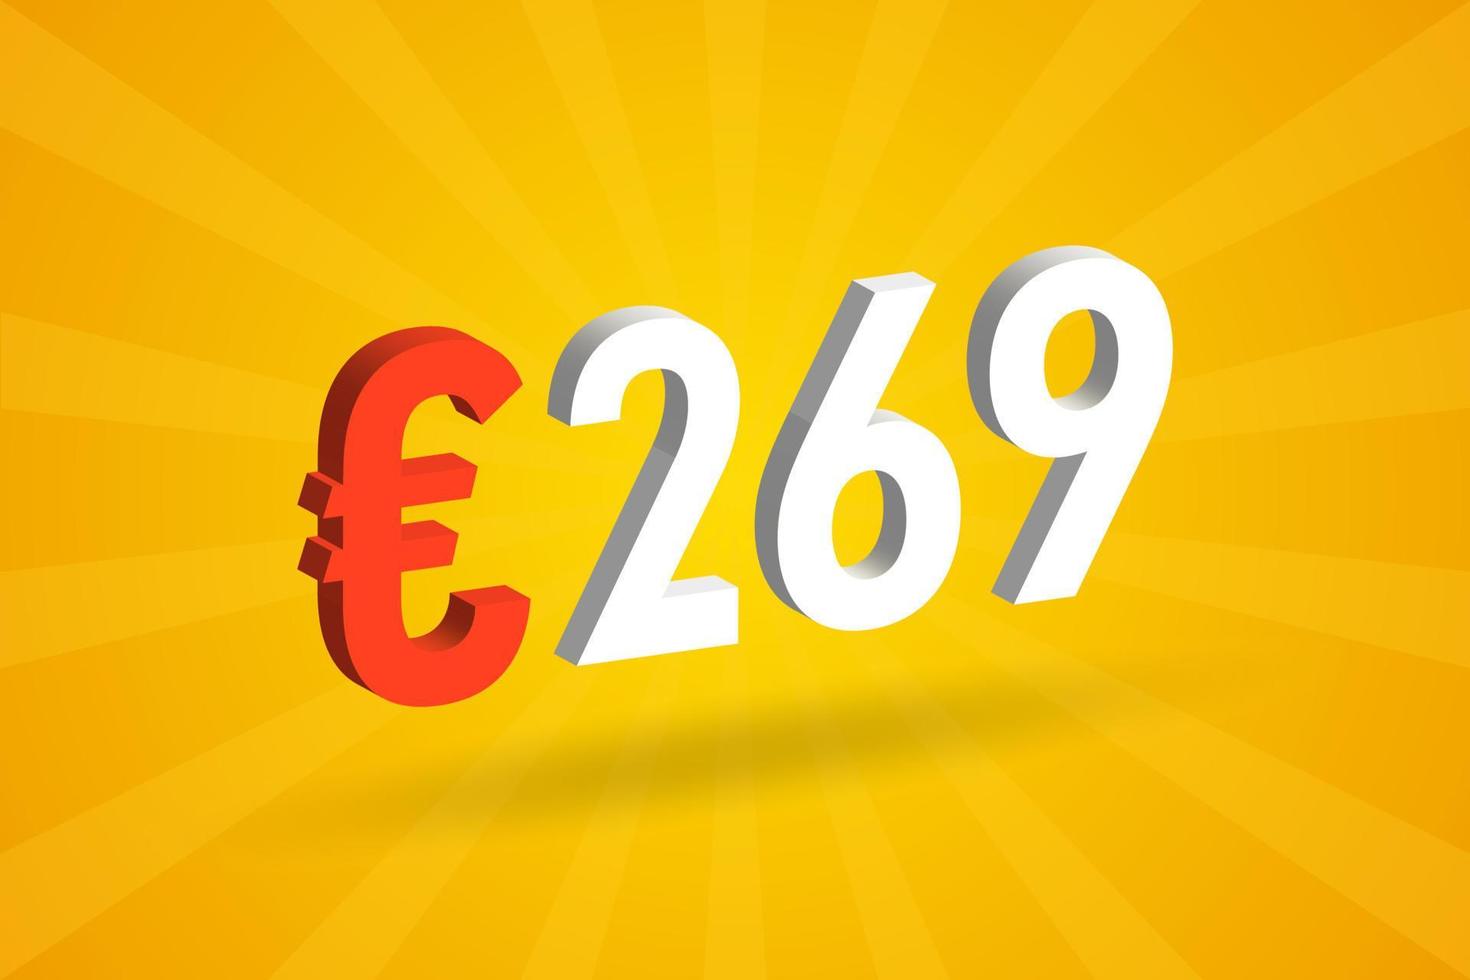 269 Euro Currency 3D vector text symbol. 3D 269 Euro European Union Money stock vector